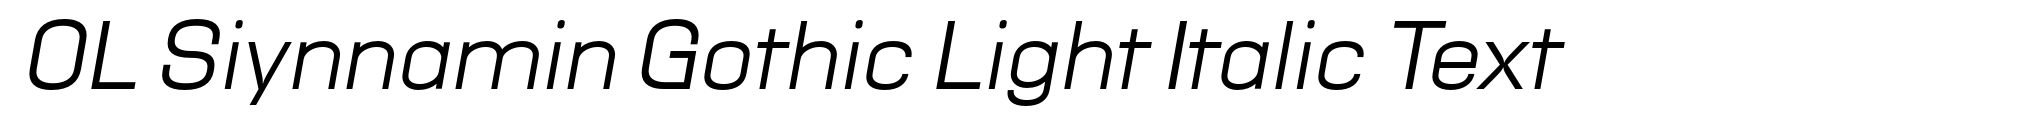 OL Siynnamin Gothic Light Italic Text image